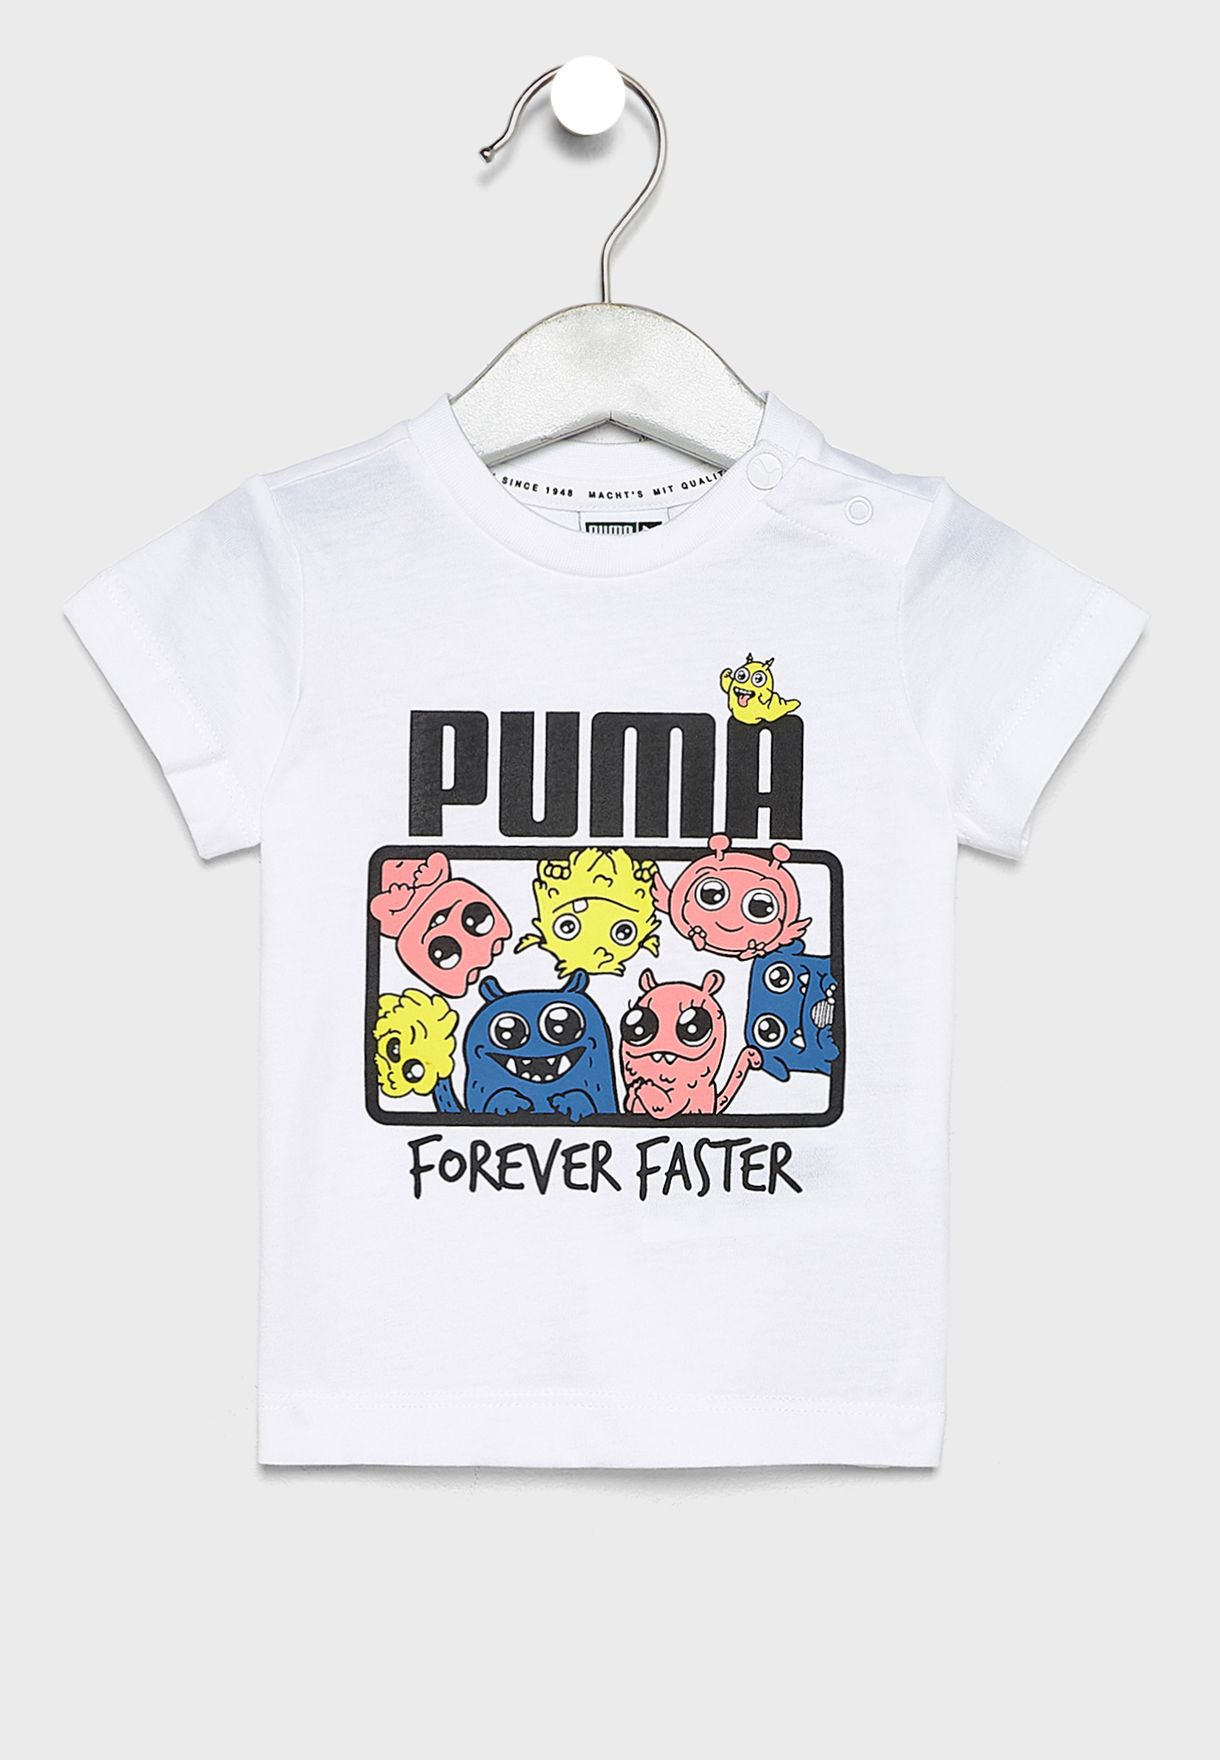 puma kids shirts